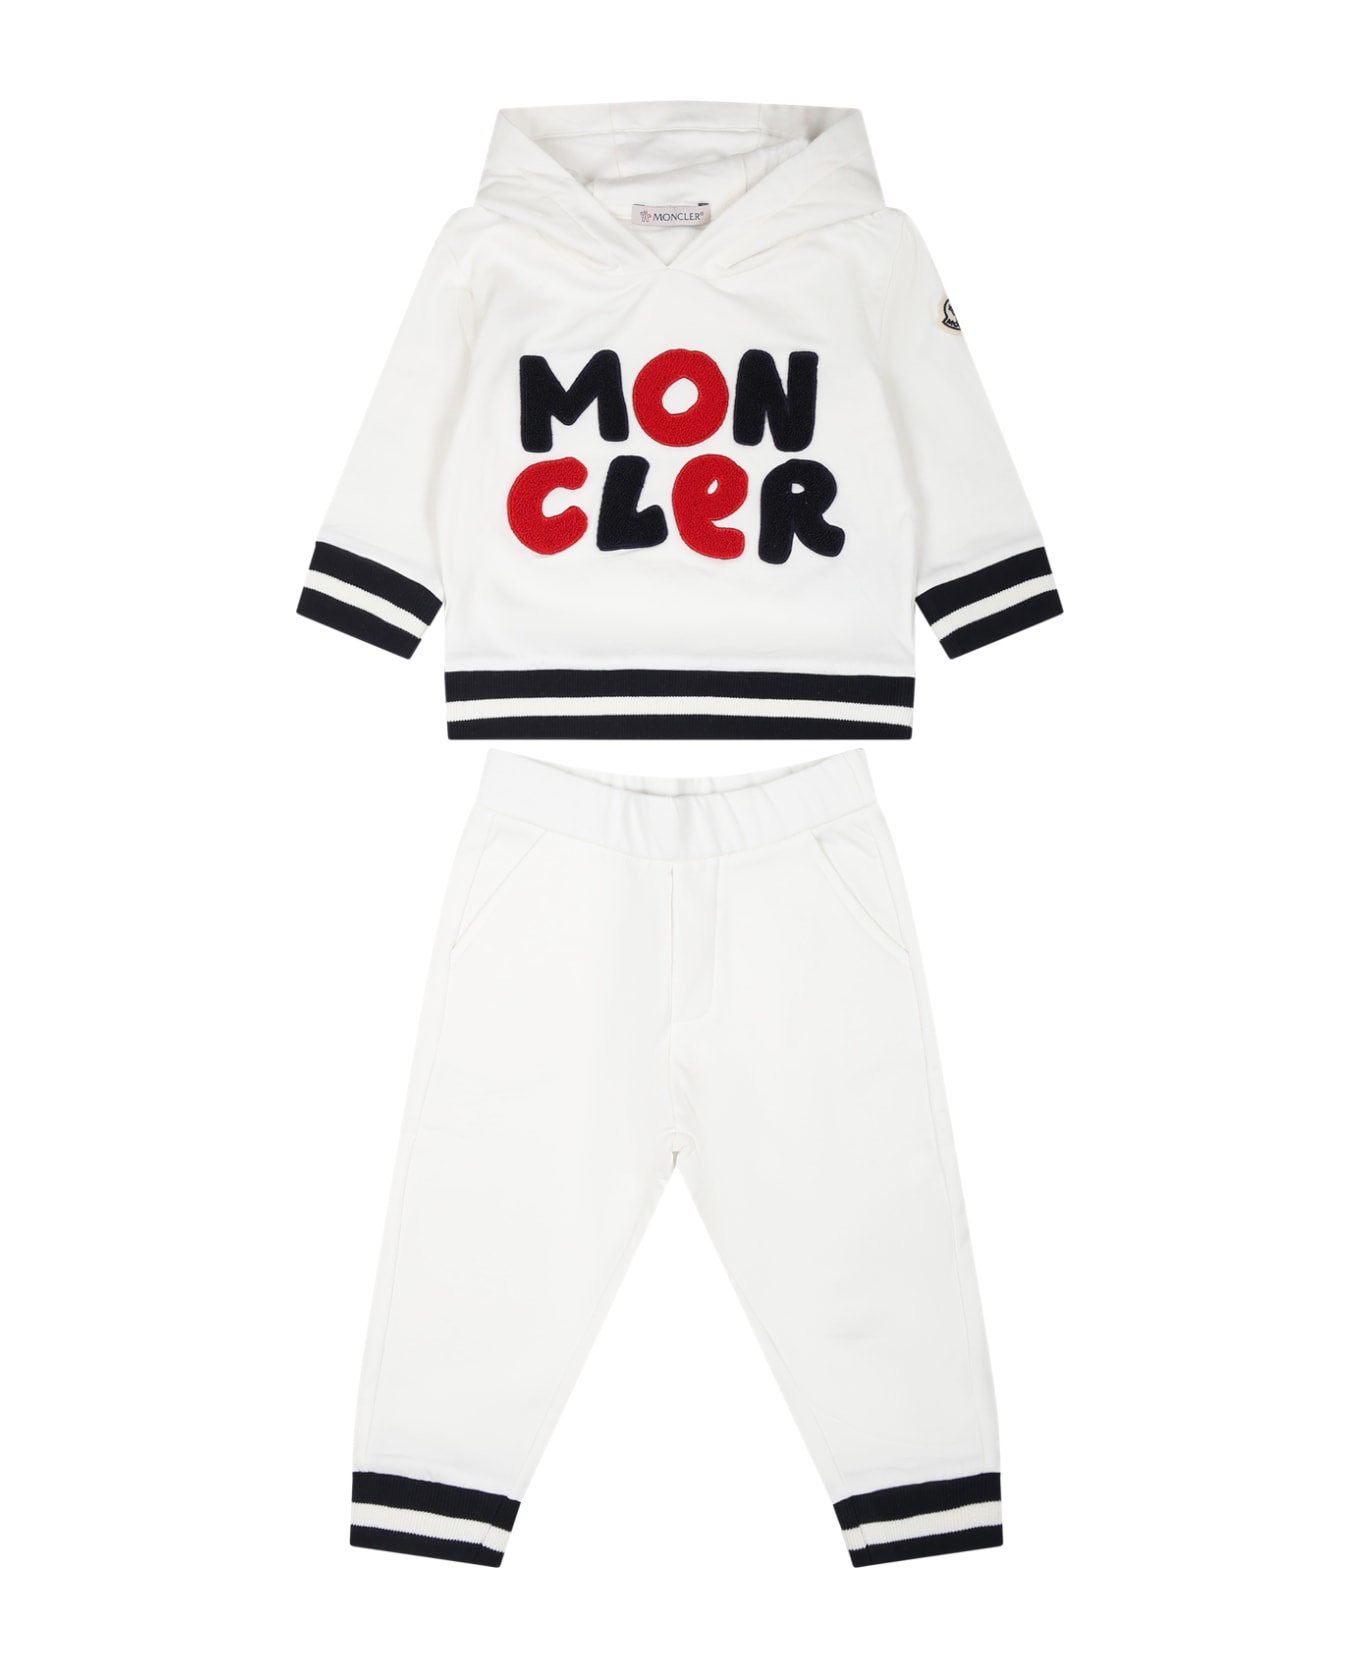 Moncler White Set For Baby Boy With Logo - White